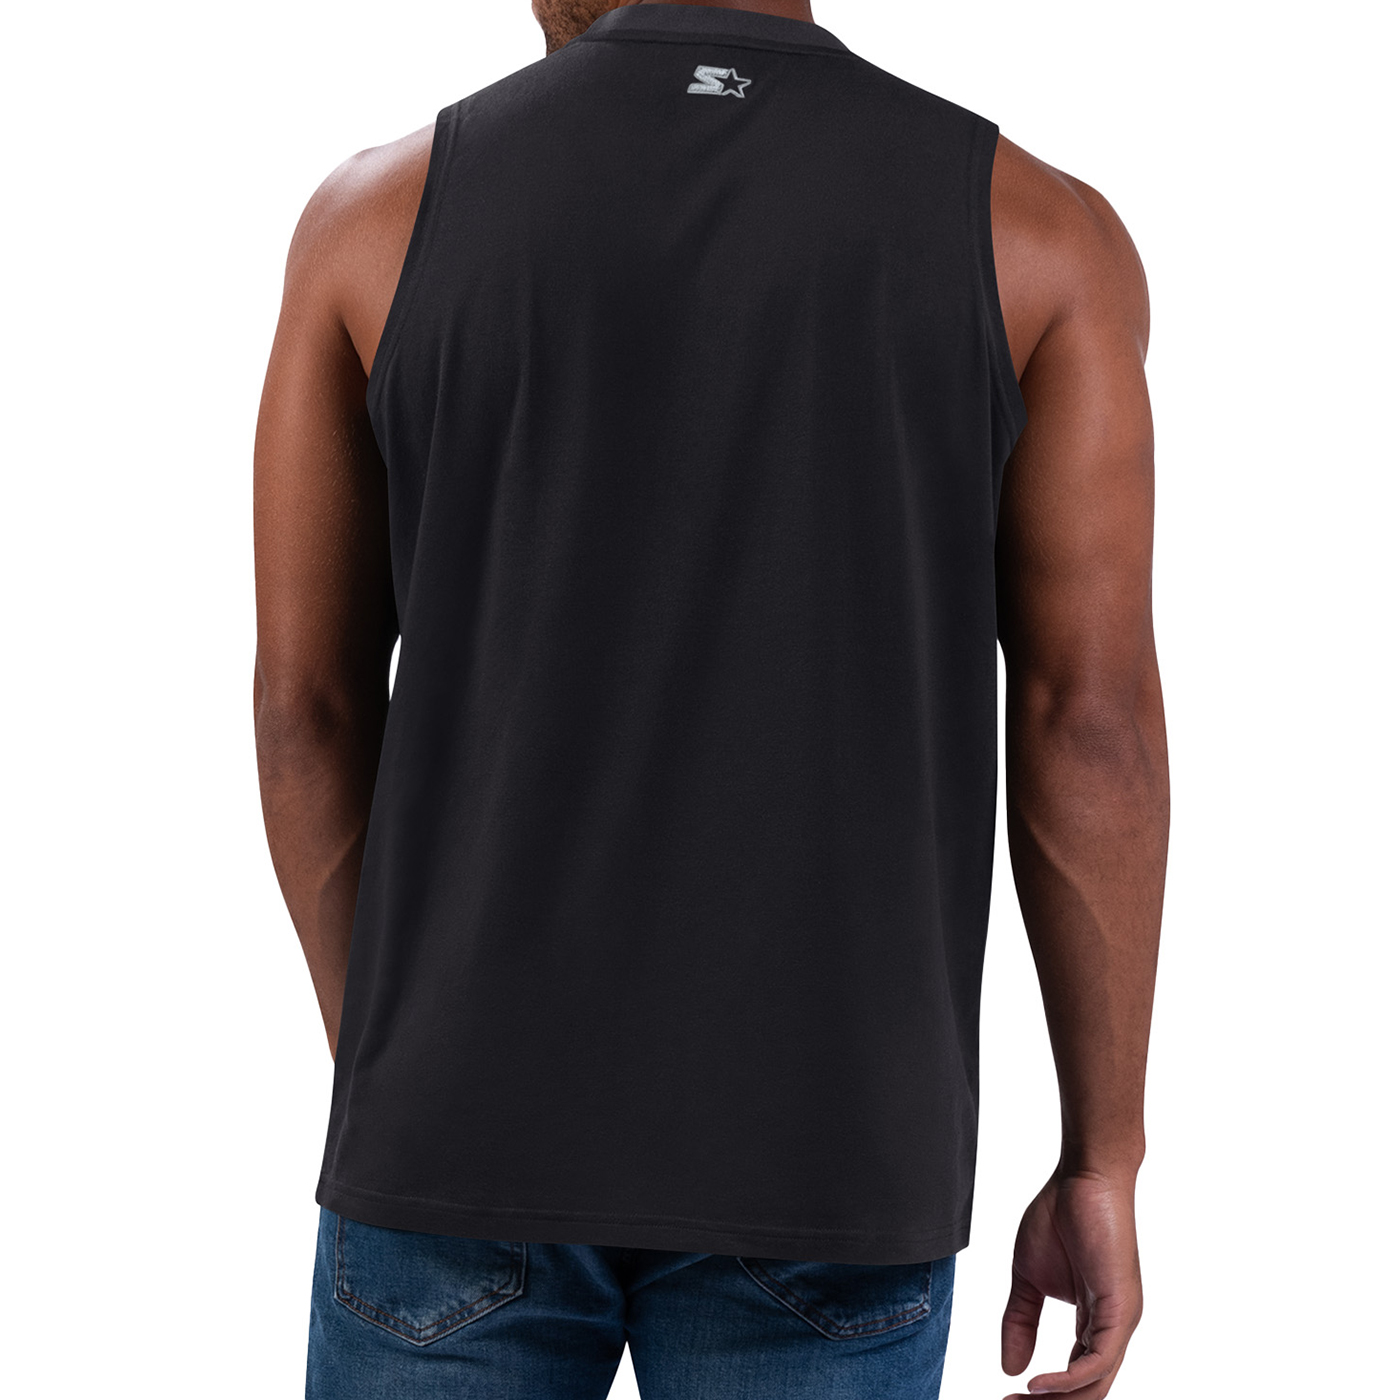 NFL Las Vegas Raiders Tank Top Mens XS or S Sleeveless T Shirt Vest